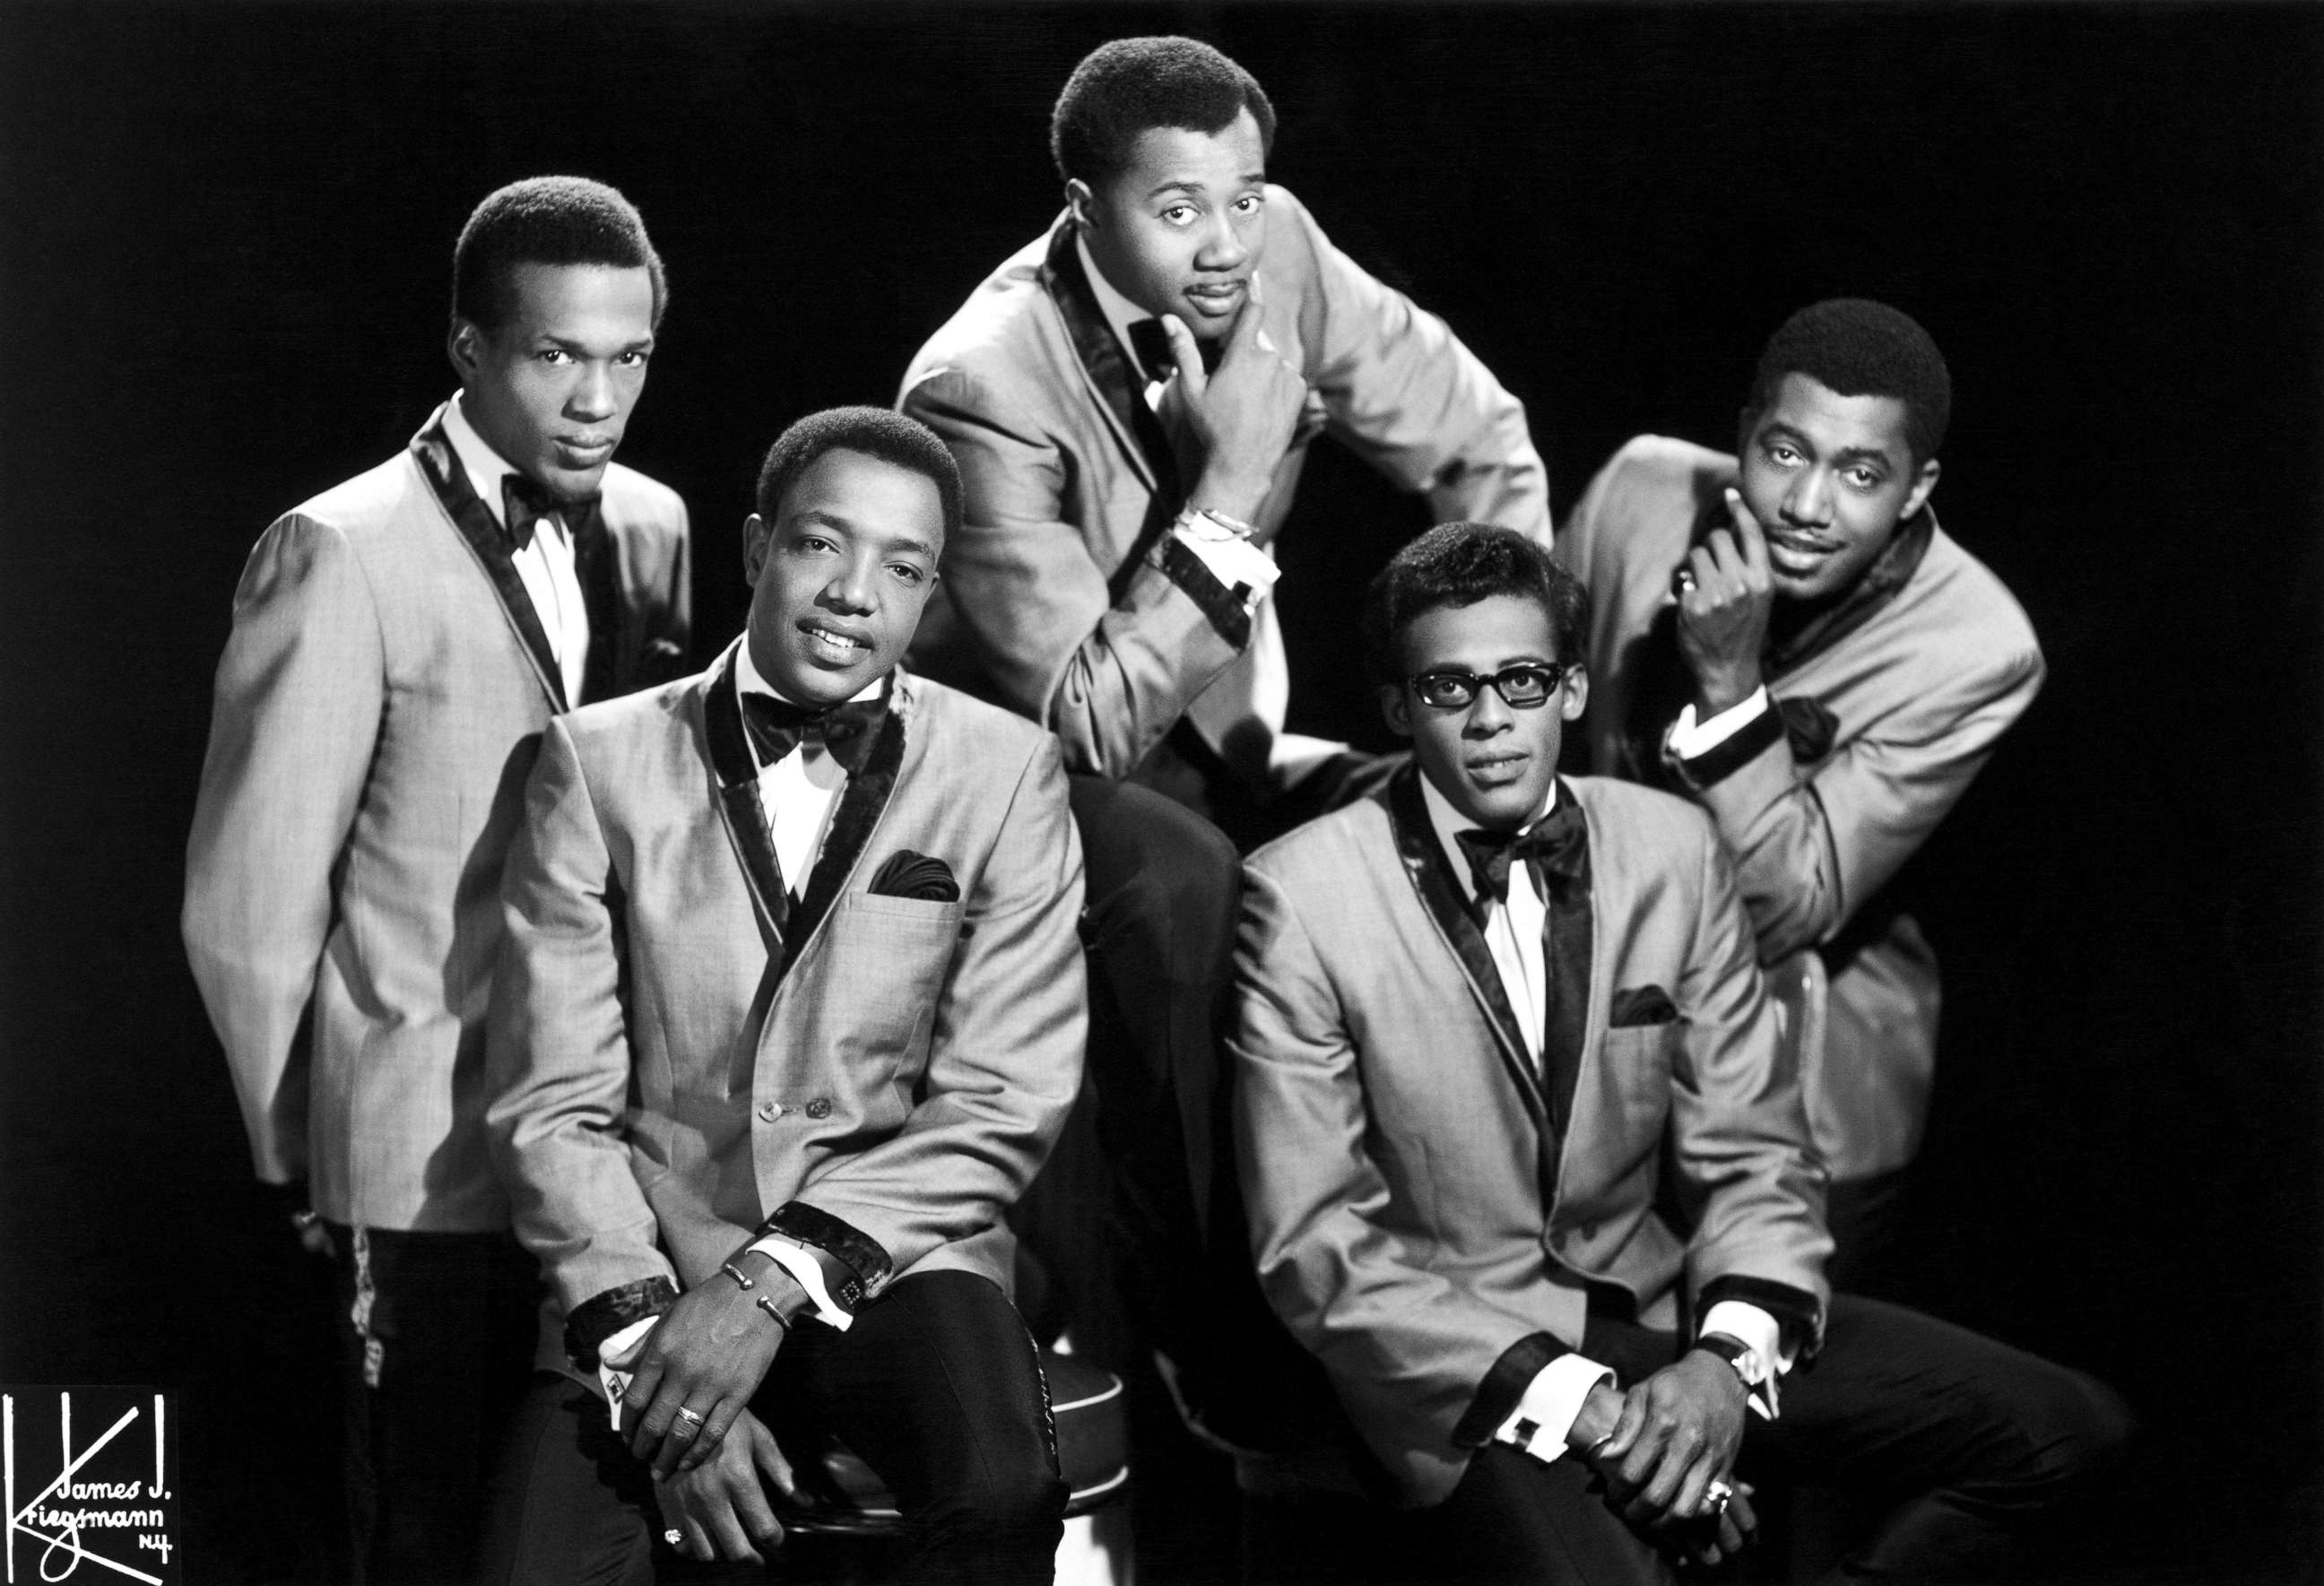 PHOTO: The Temptations, L-R: Paul Williams, Dennis Edwards, Melvin Franklin, Eddie Kendricks, Otis Williams, circa 1968, in New York. 